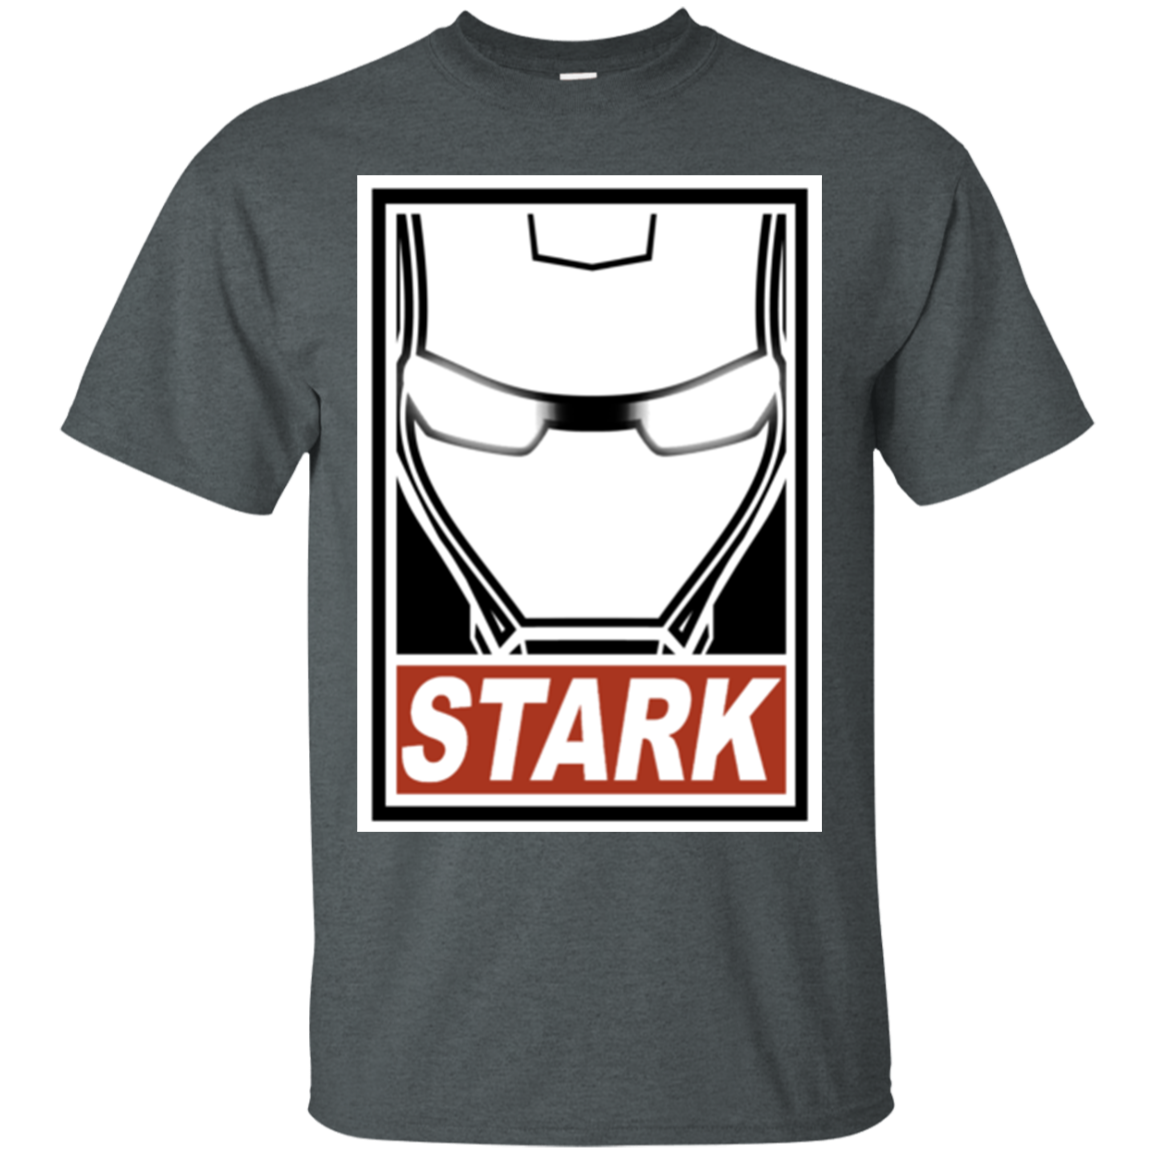 Obey Stark T-Shirt